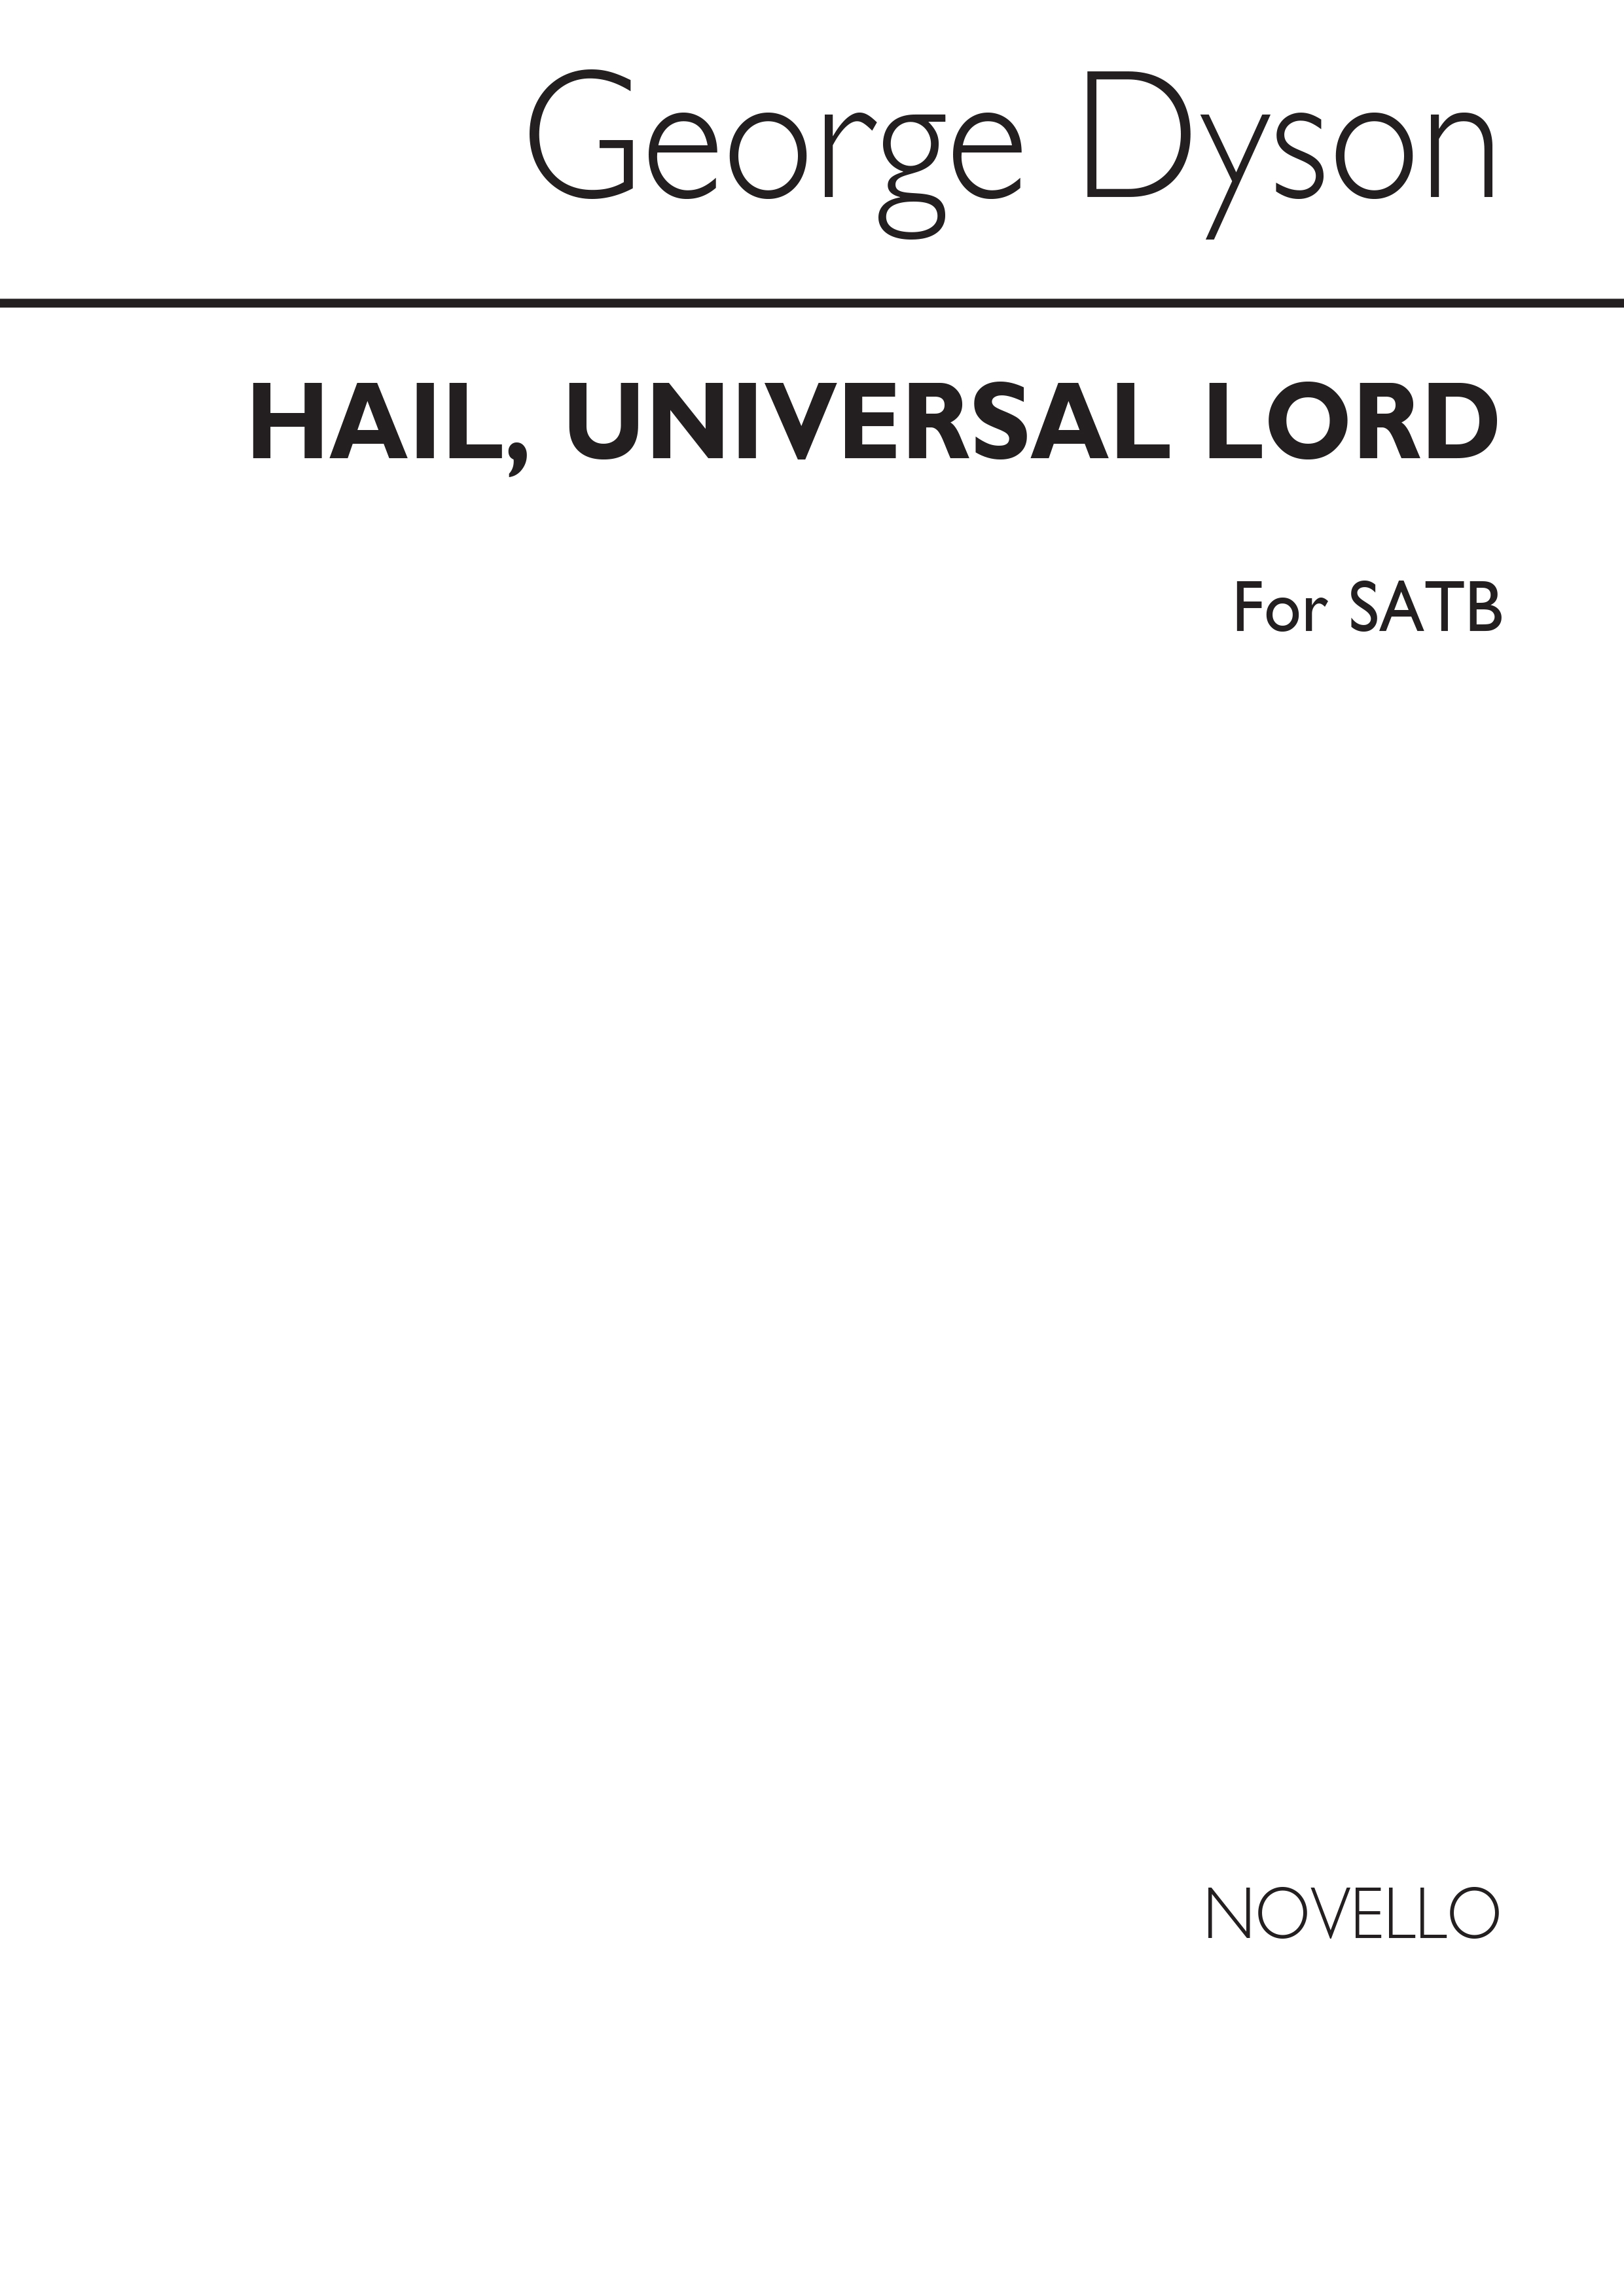 George Dyson: Hail Universal Lord